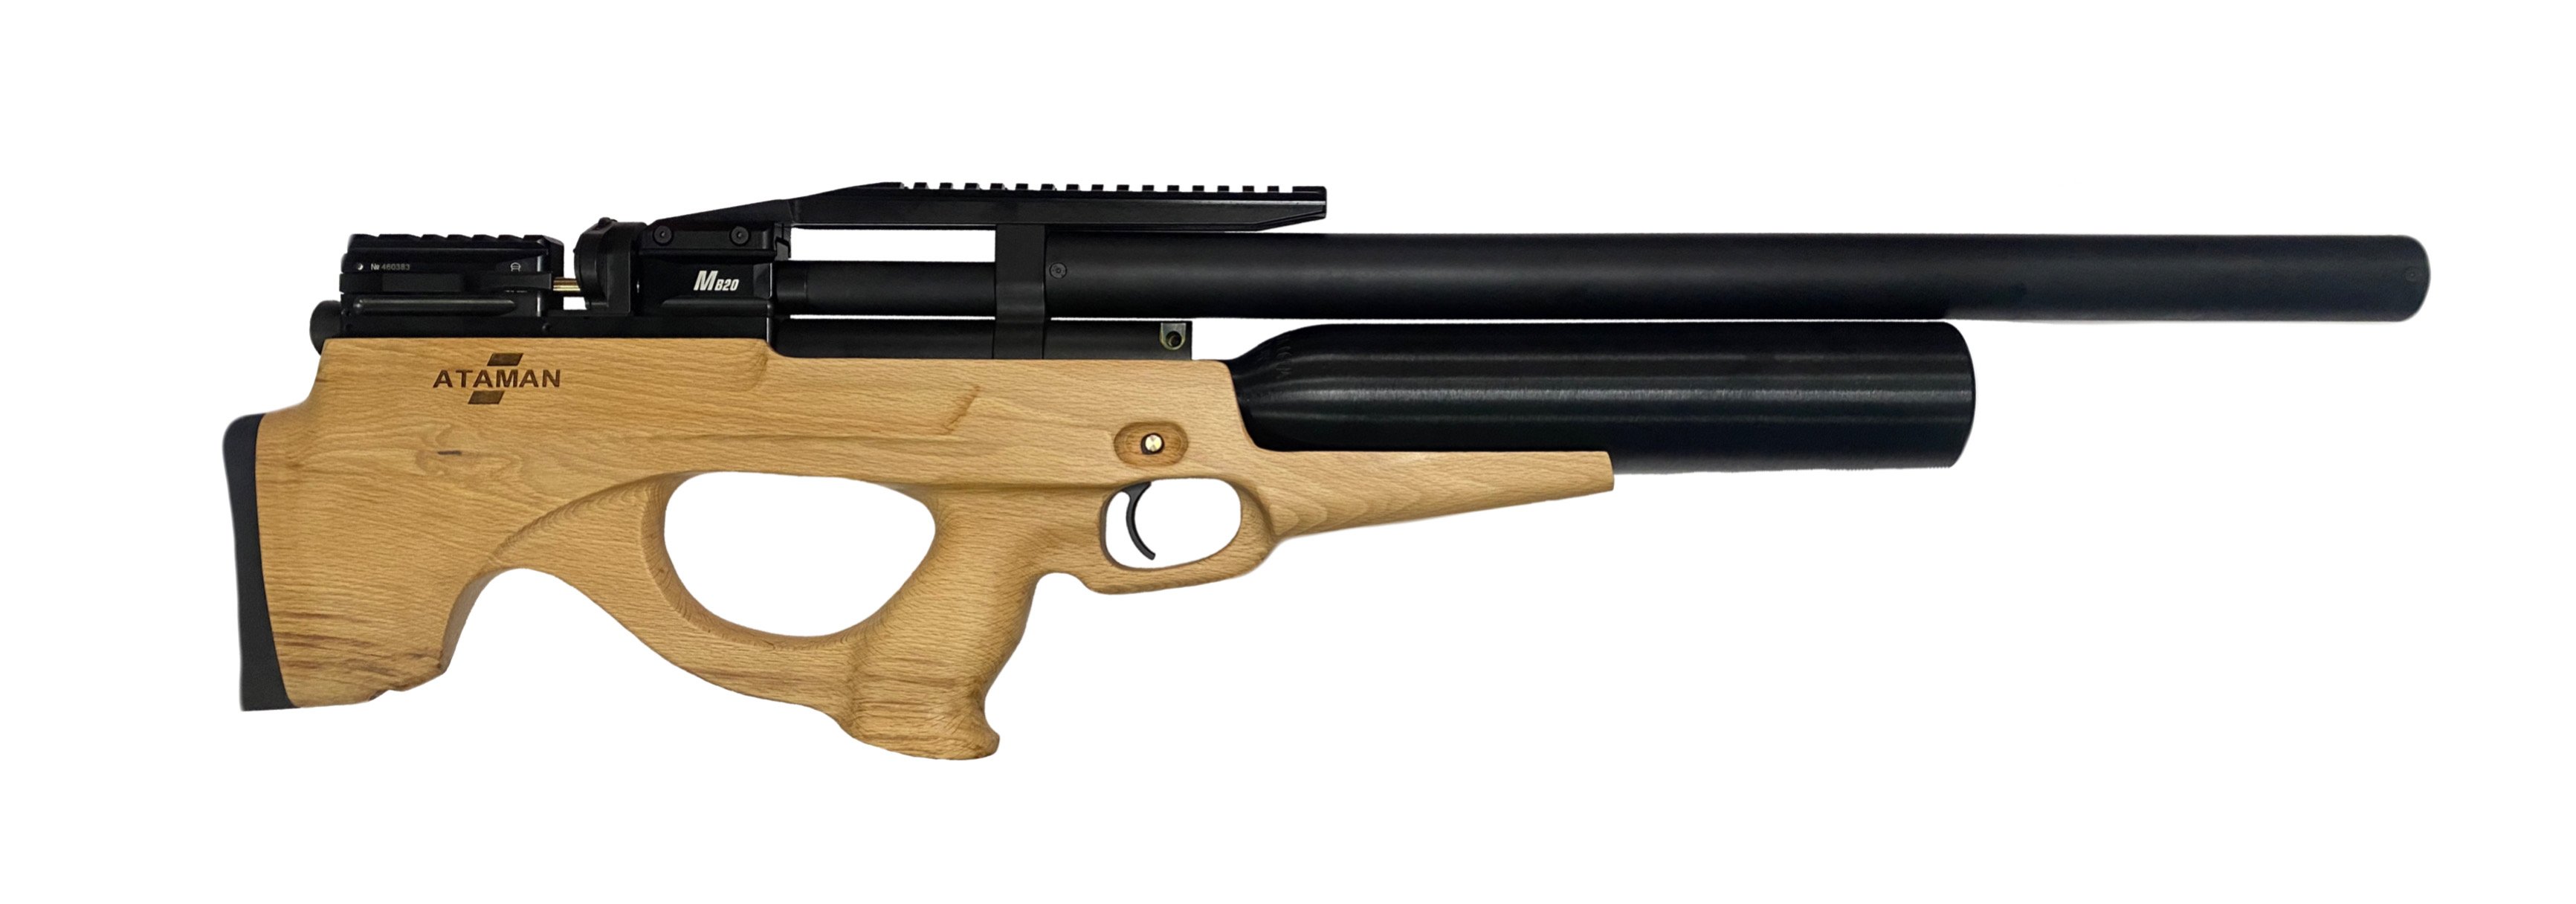 Пневматическая PCP винтовка ATAMAN Булл-пап MB20L, кал.6.35мм (Beech)